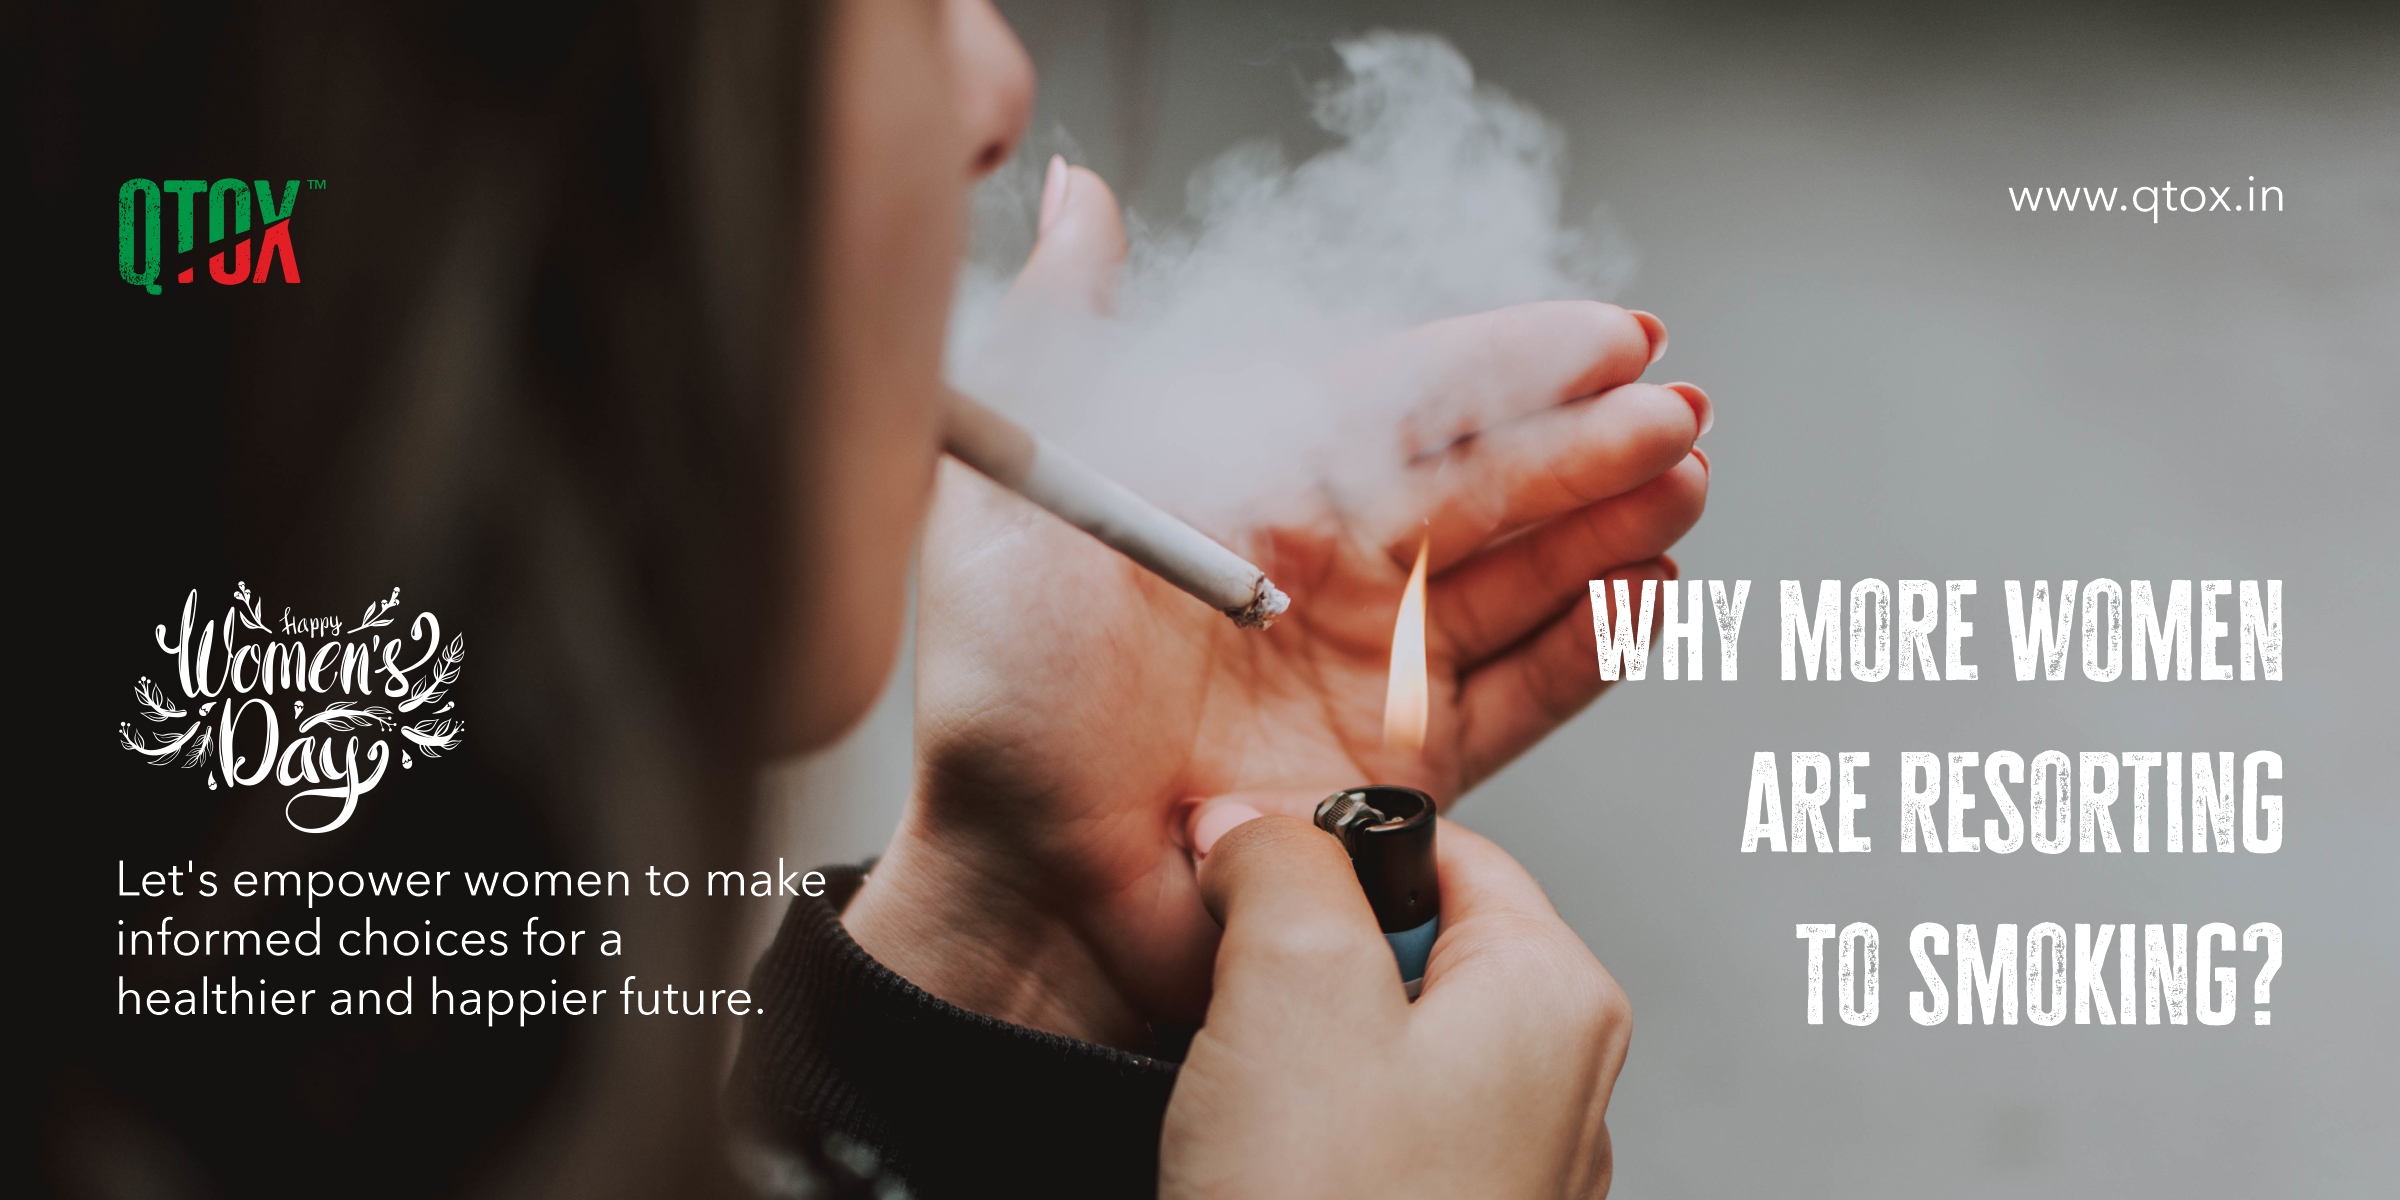 Why more women are resorting to smoking?